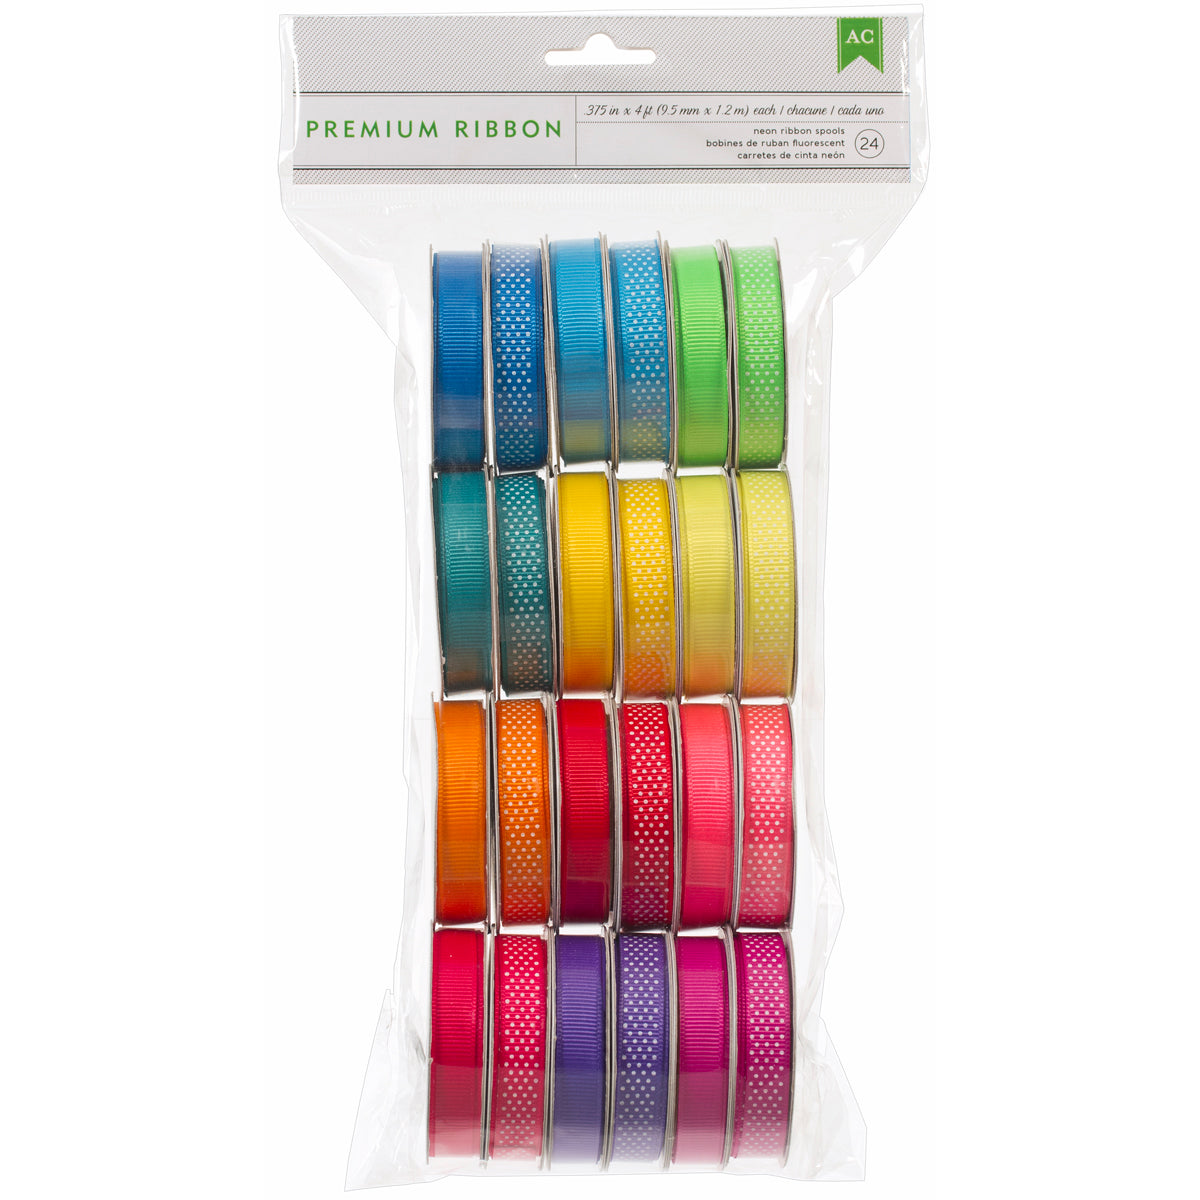 American Crafts Value Pack Premium Ribbon 24 Spools Neon